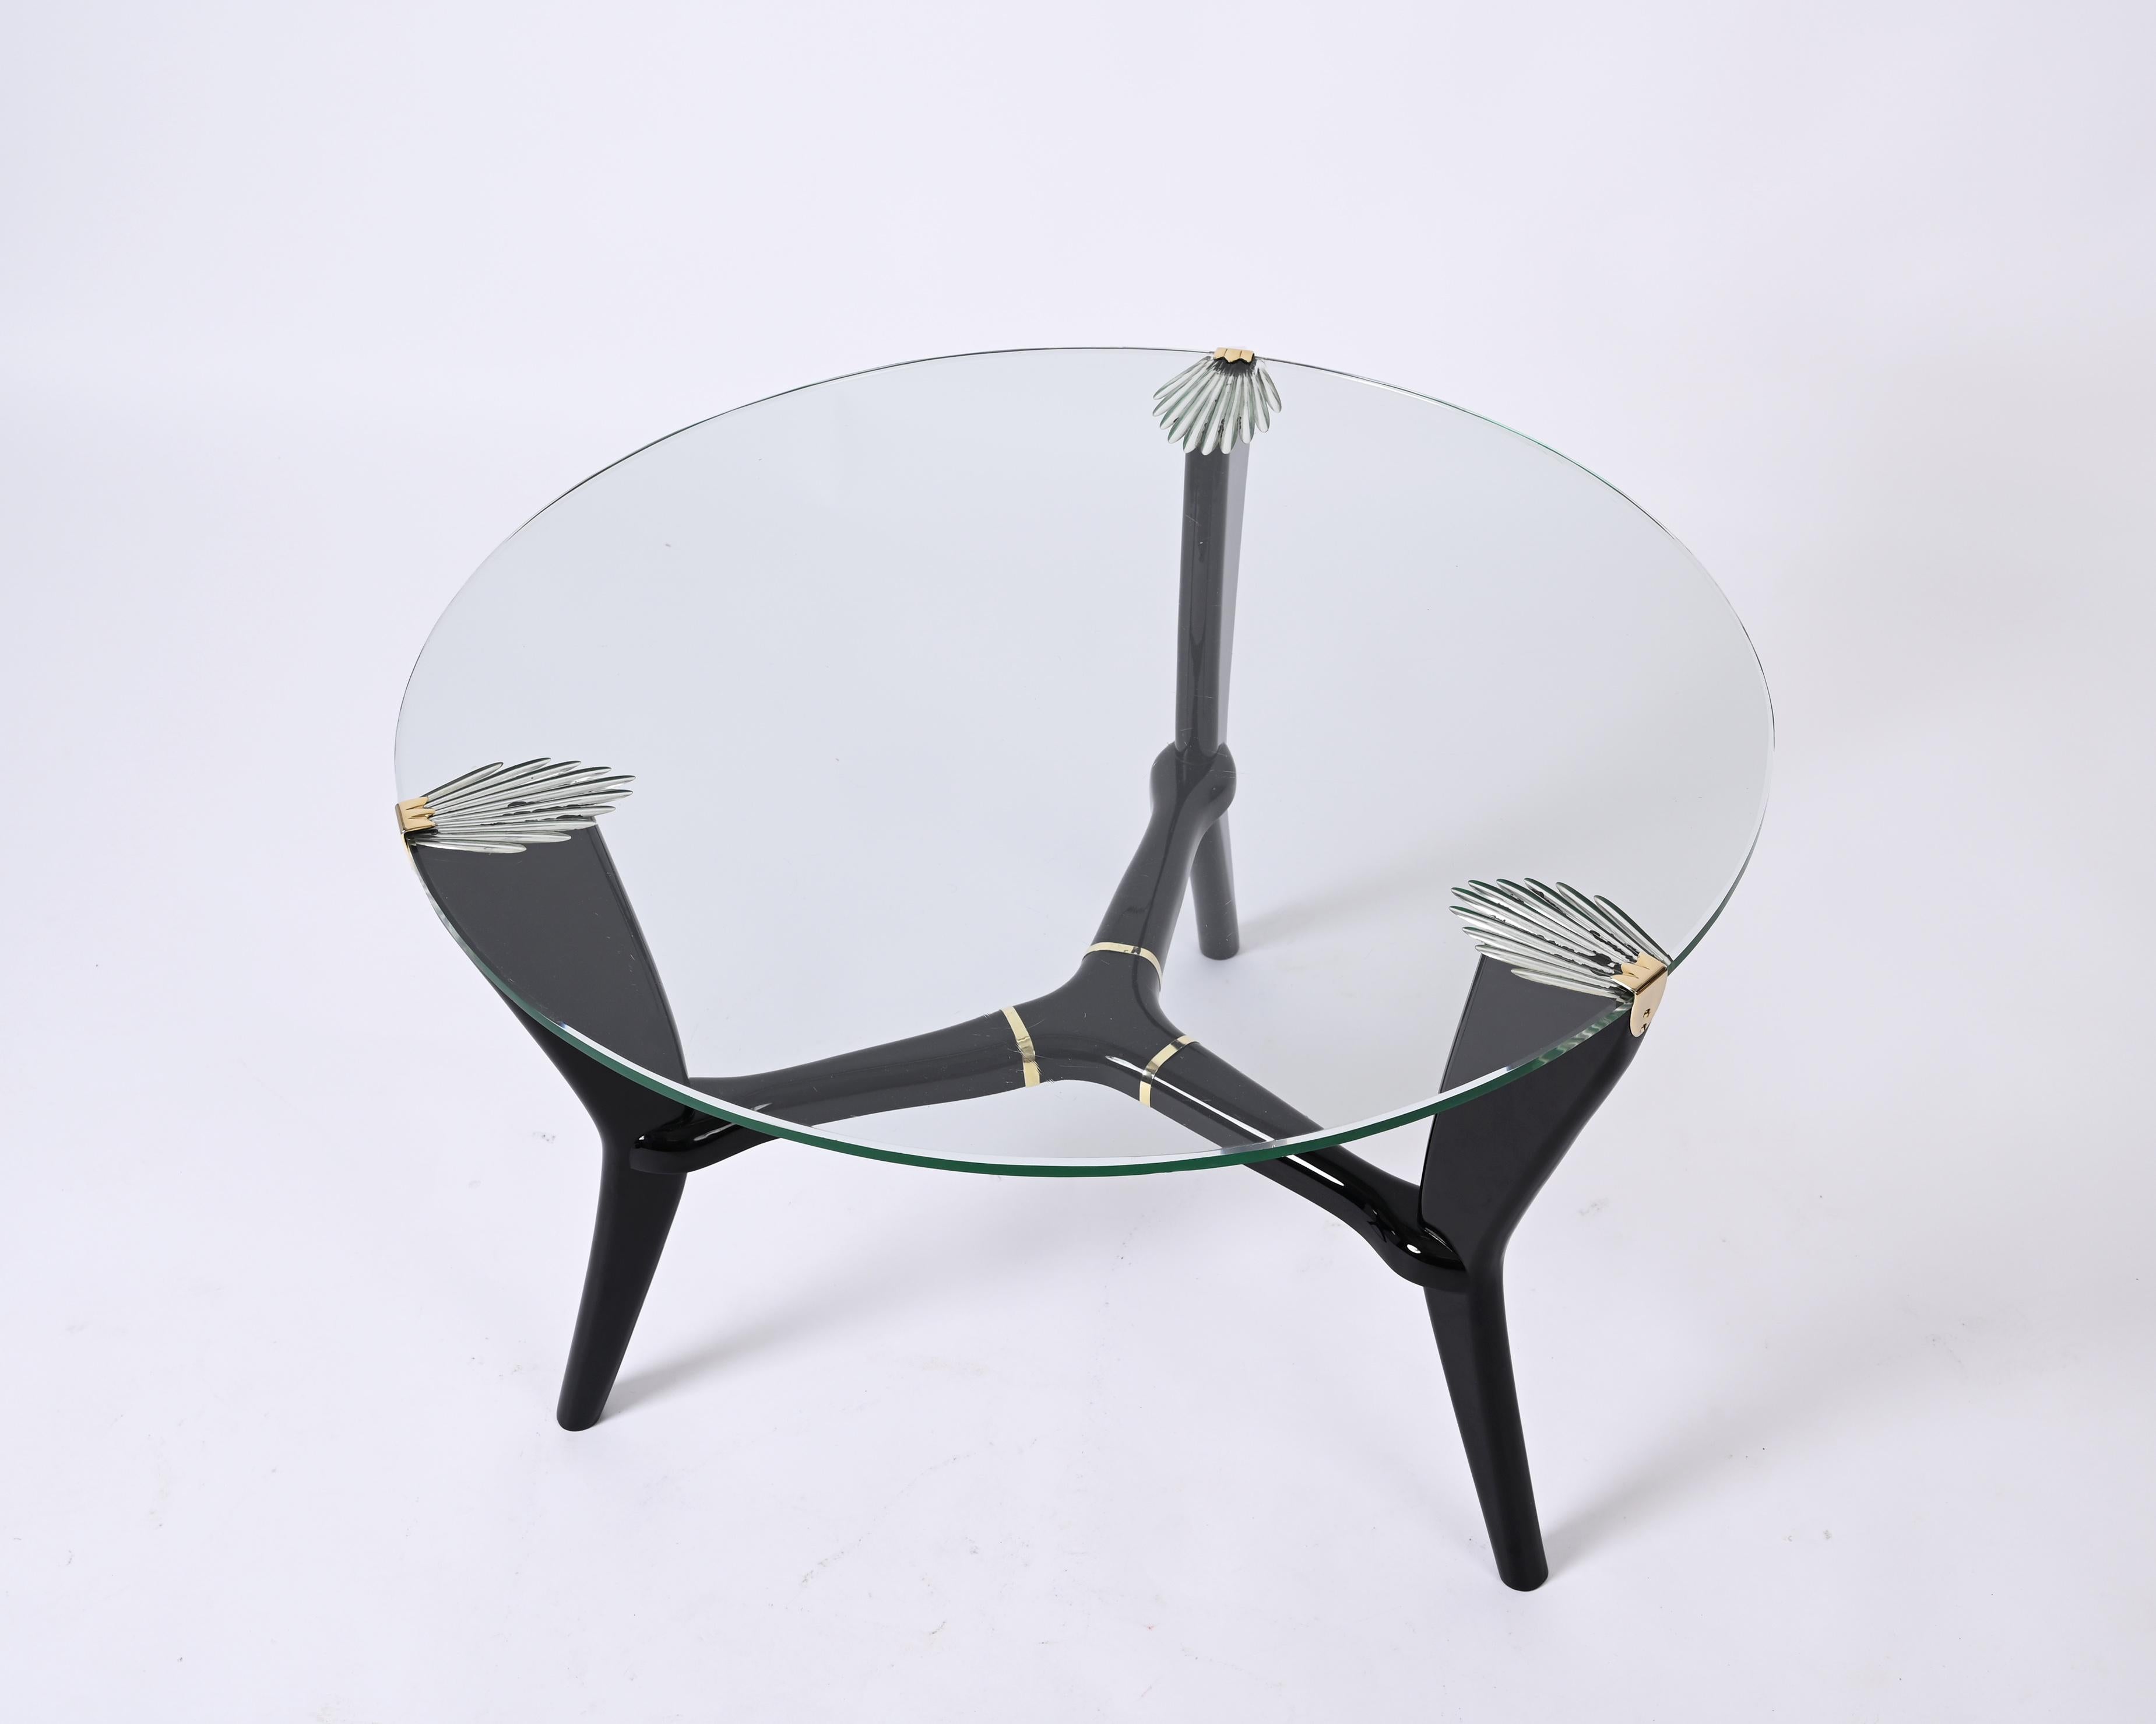 Art Deco Deco Ebonized Wood and Glass Round Italian Coffee Table, Gio Ponti Style 1940s